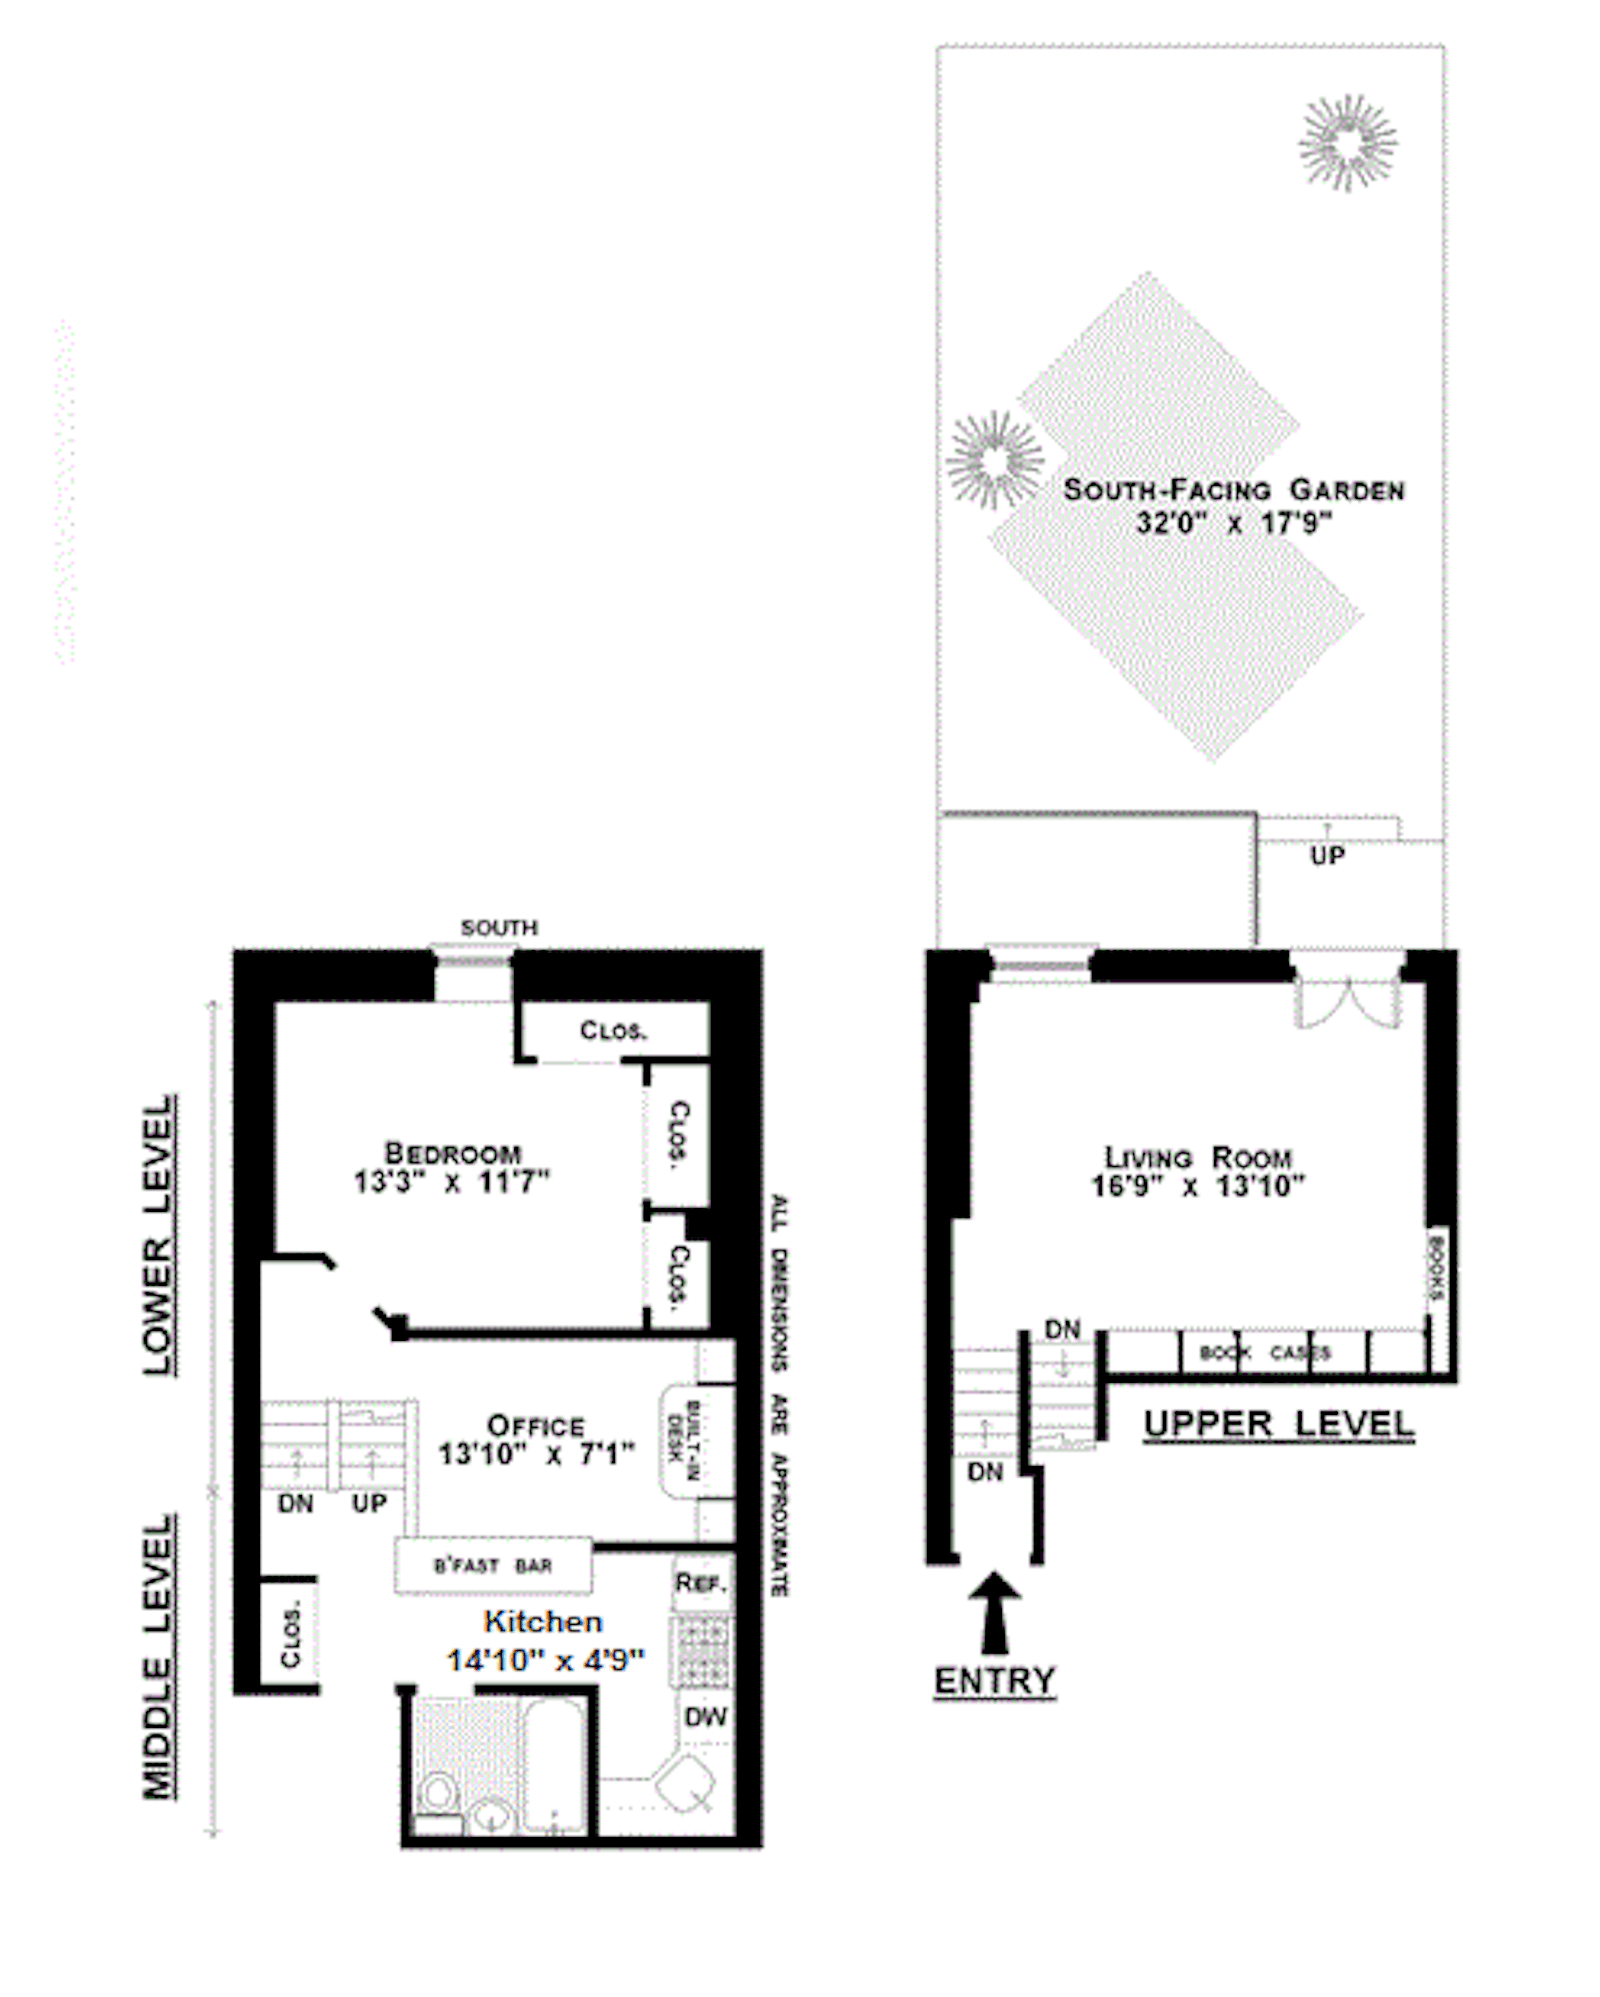 Floorplan for 142 West 82nd Street, 2